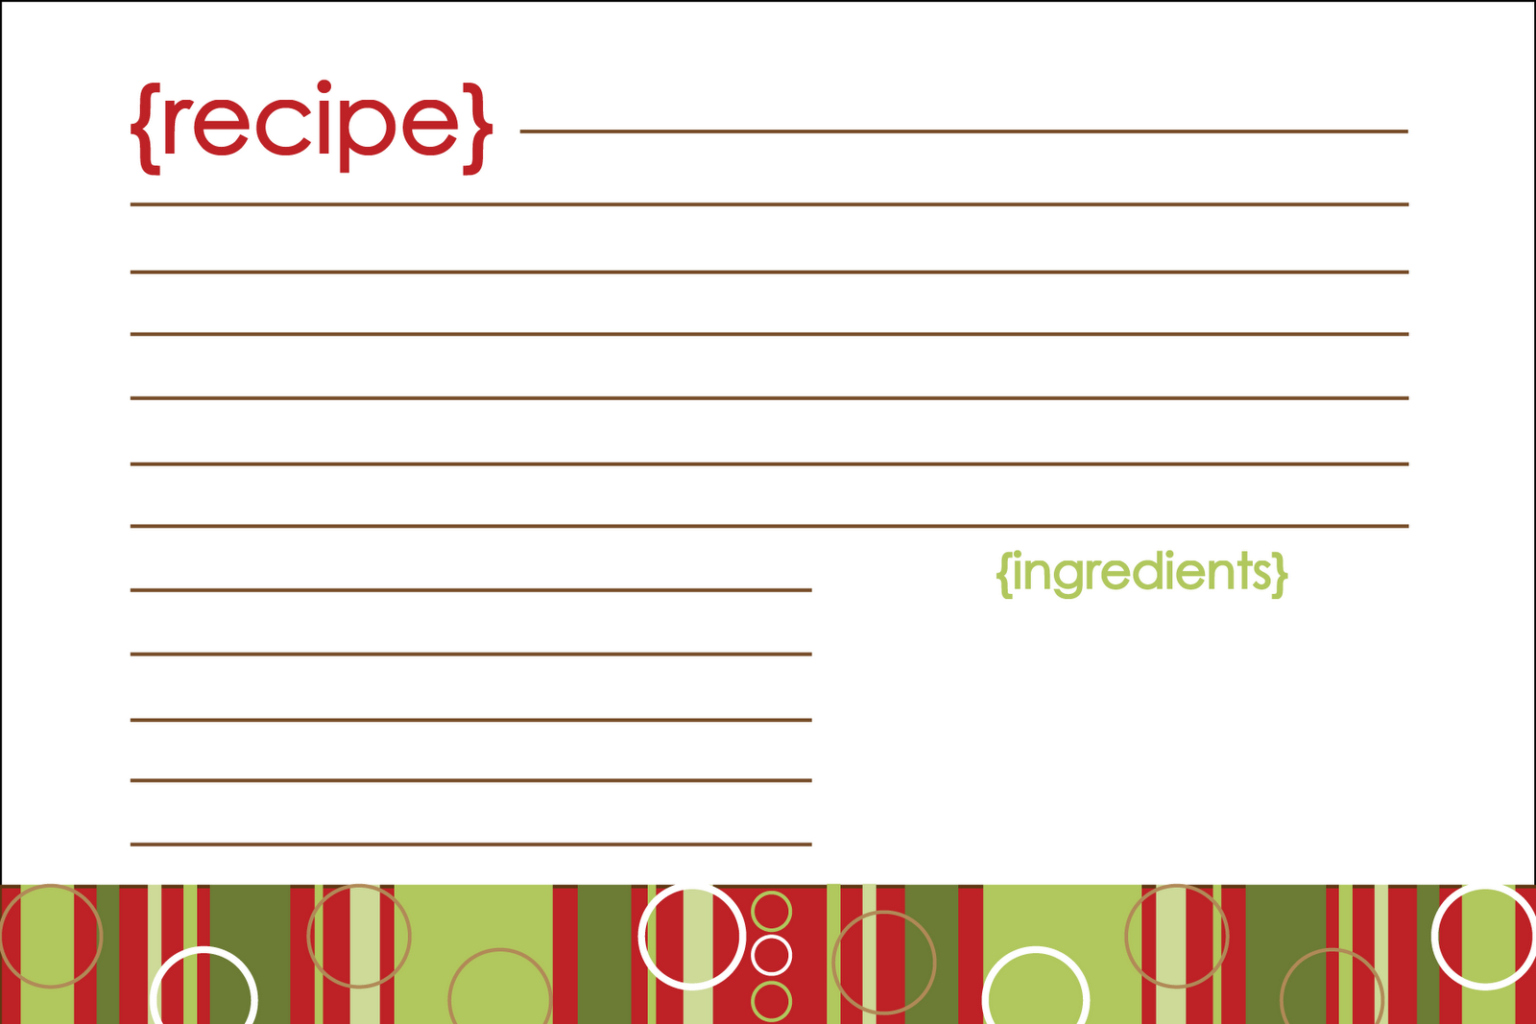 microsoft word recipe card template